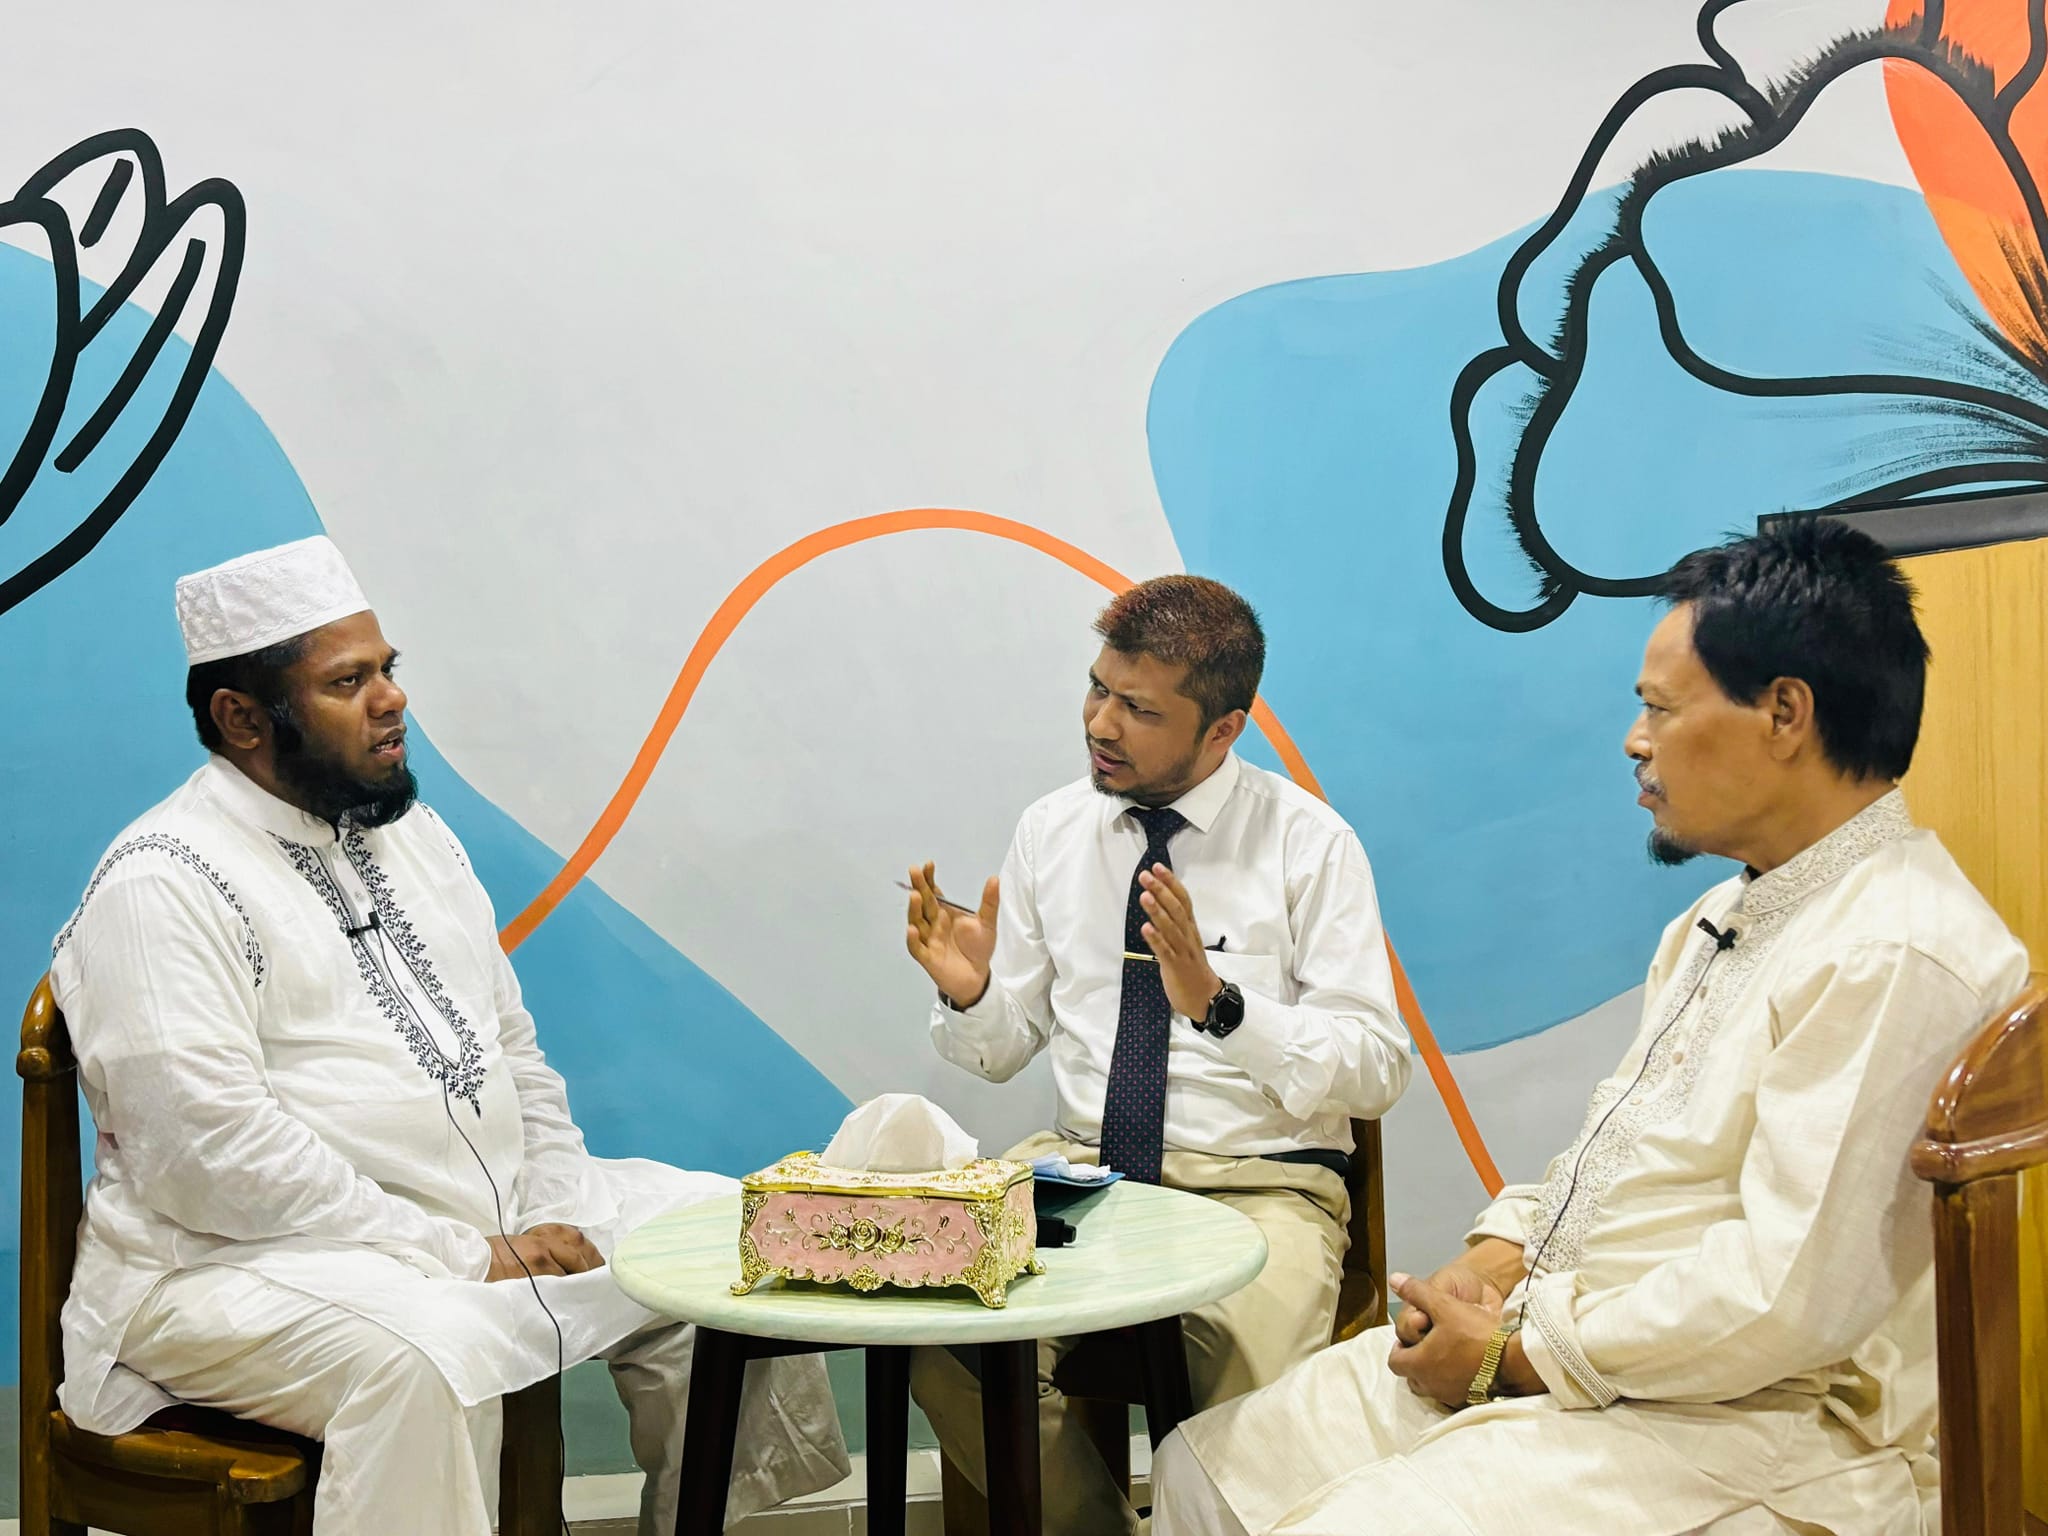 Ershad Ullah Khan with AFM Wahidur Rahaman, Head of Bengali language translation team of Saudi Arabia holy Hajj